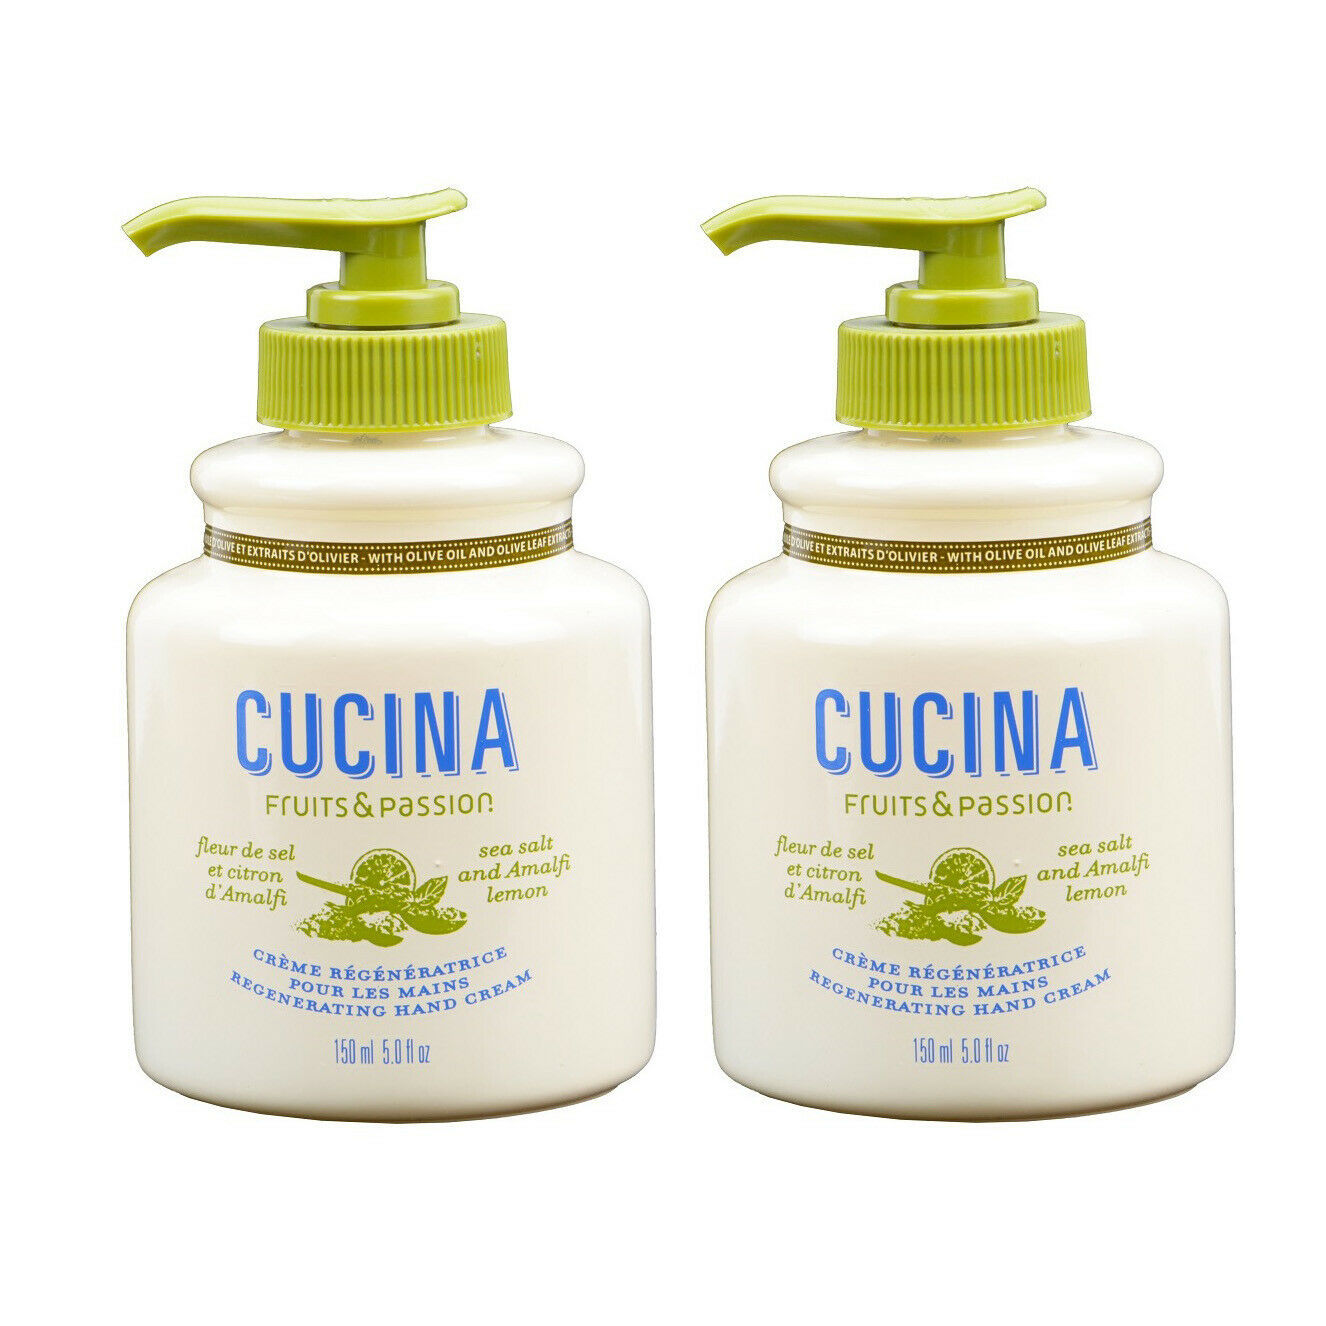 Cucina Sea Salt & Amalfi Lemon Regenerating Hand Cream 5 Oz - 2 Pack